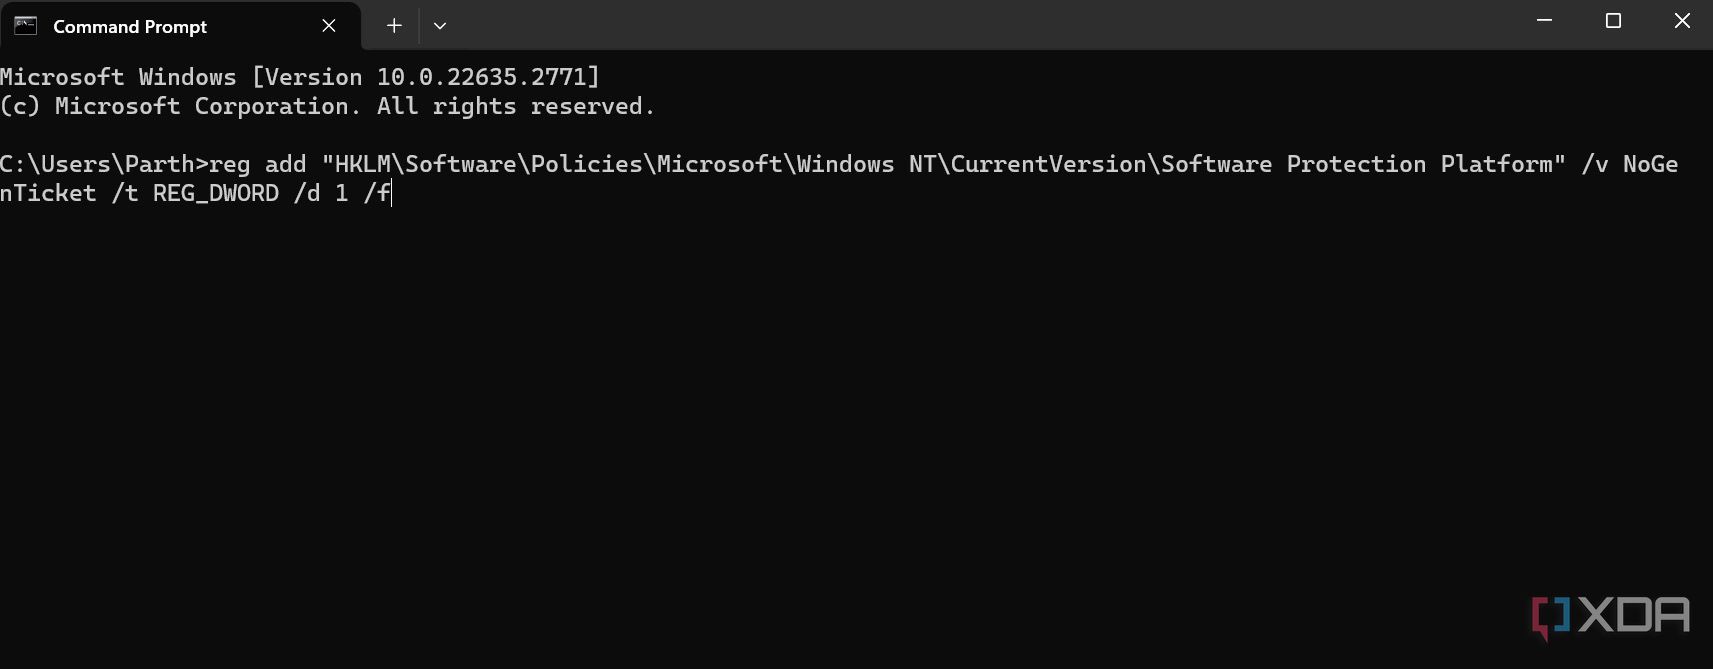 edit registry via Command Prompt on Windows